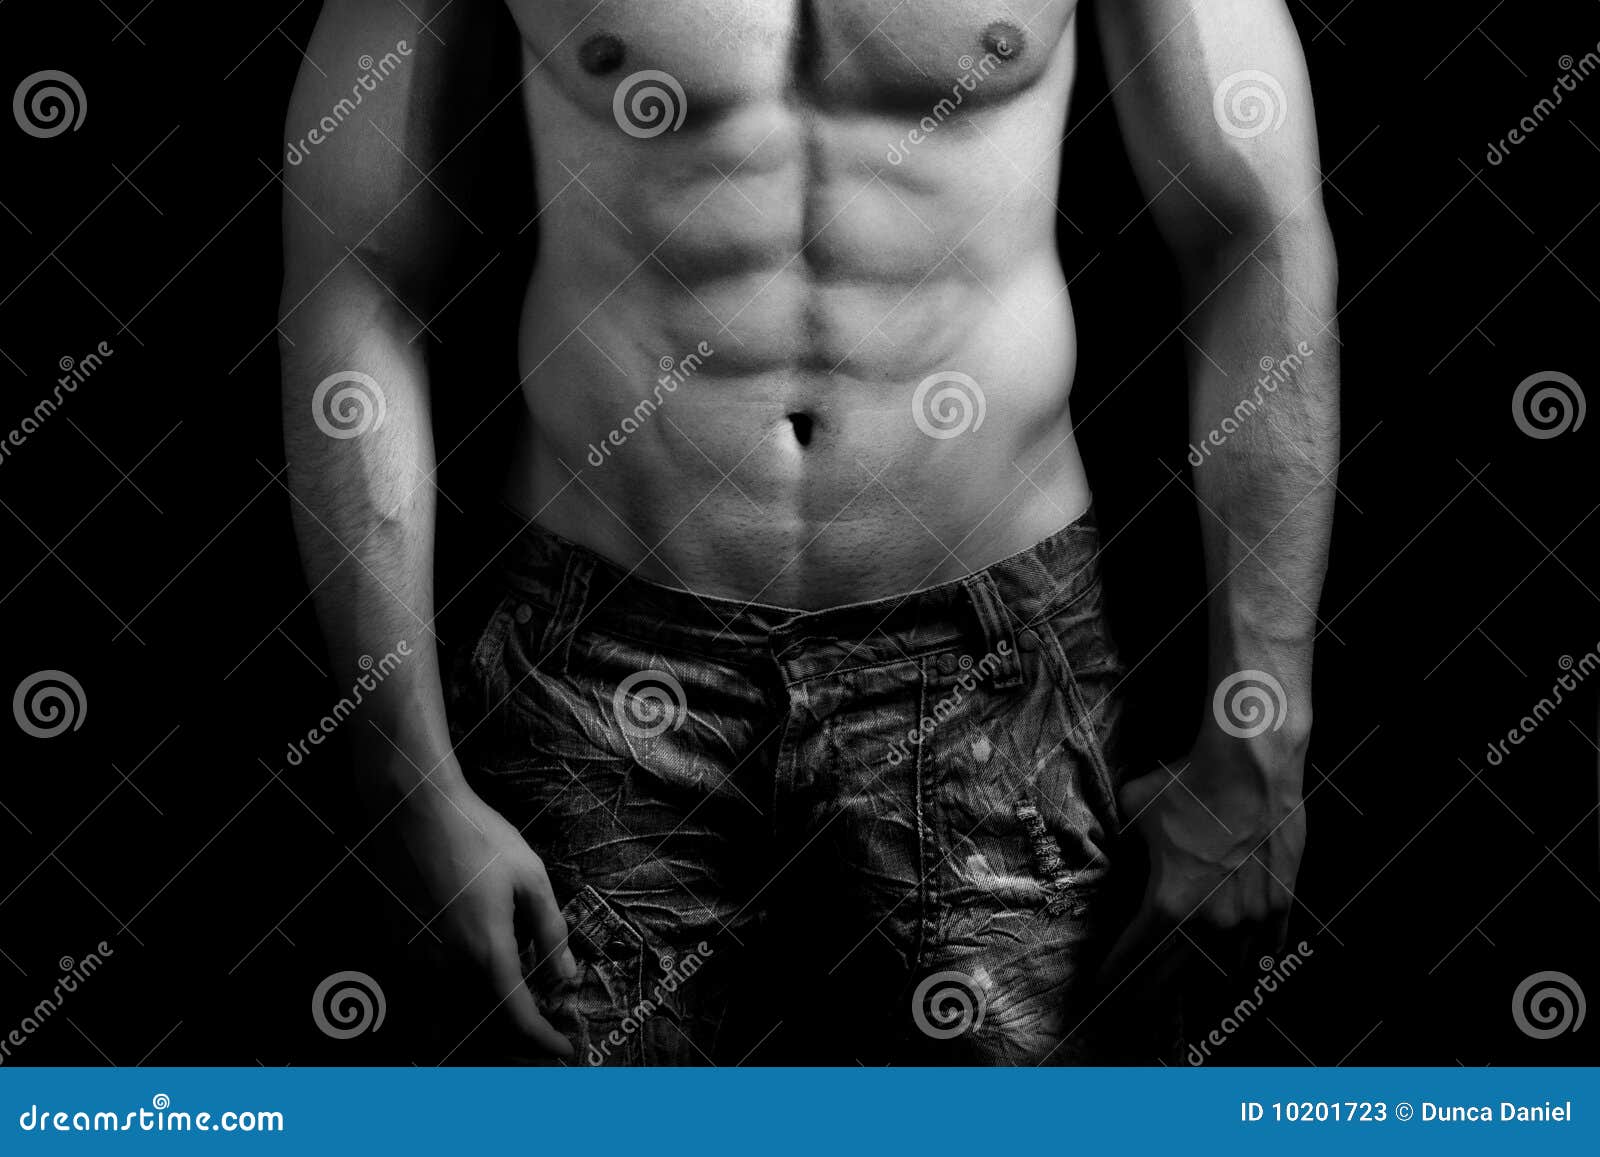 torso of muscular man with abdomen